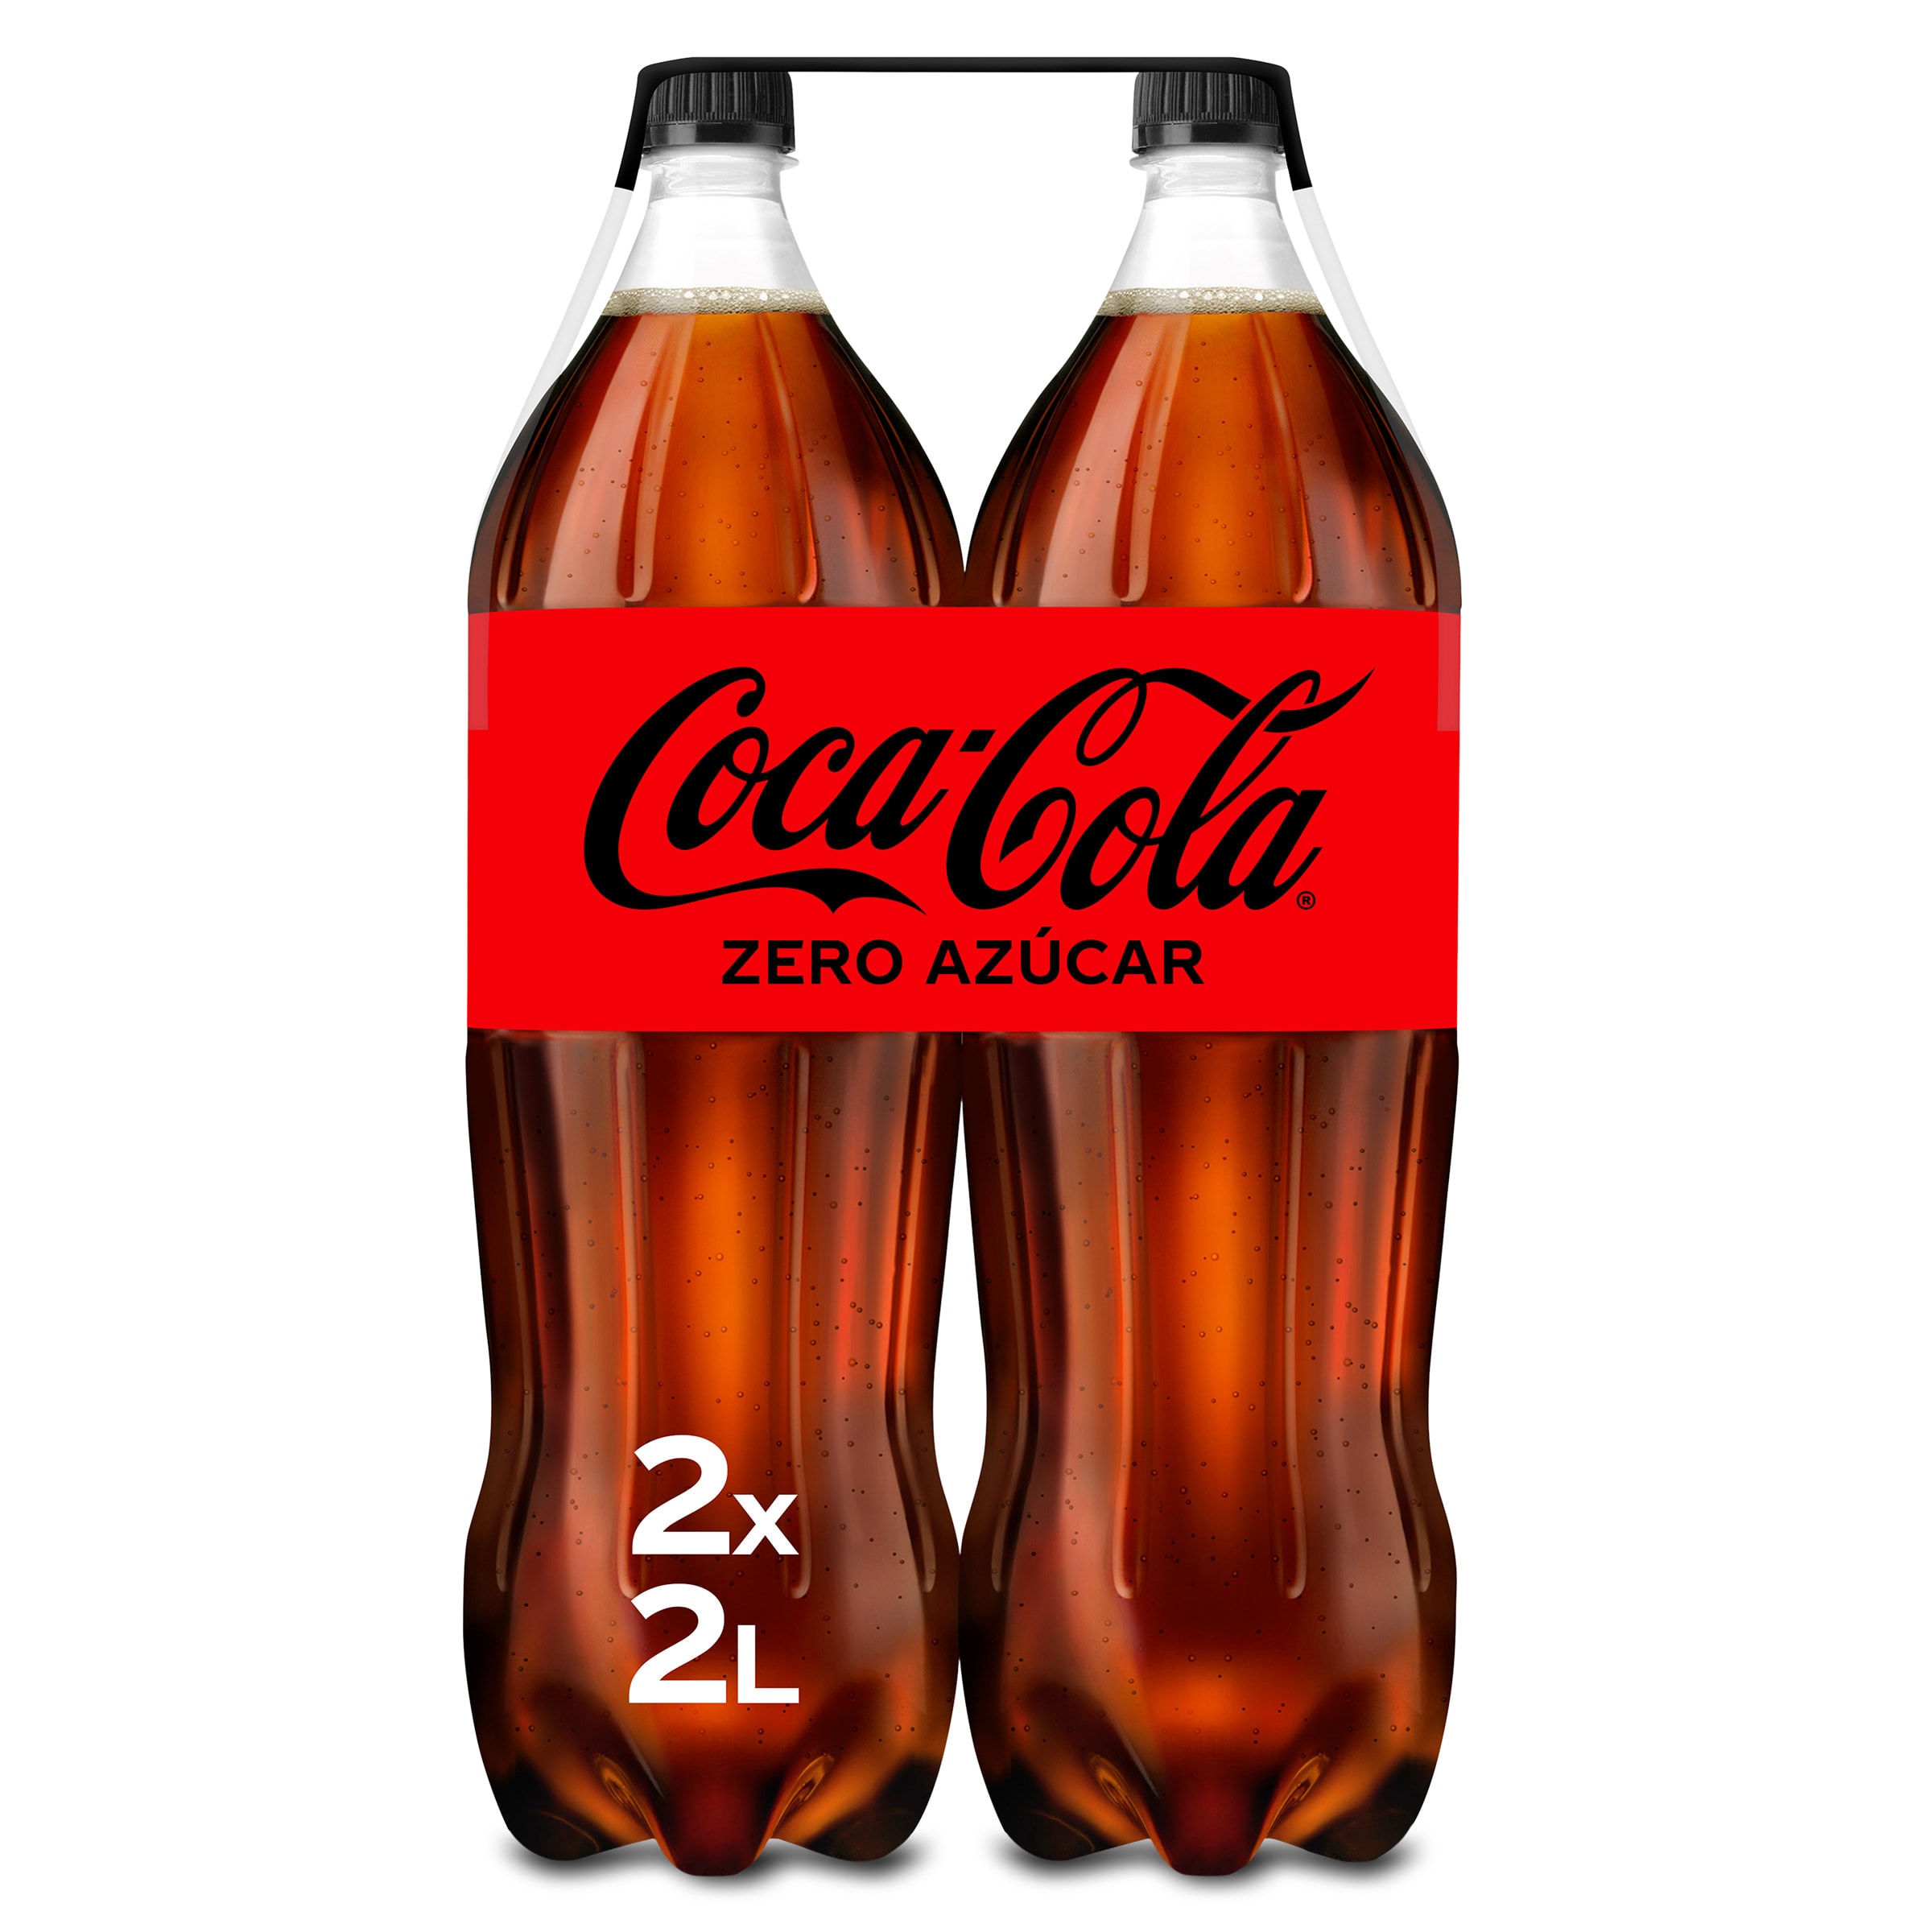 Refresco de cola Hola Cola lata 33 cl - Supermercados DIA